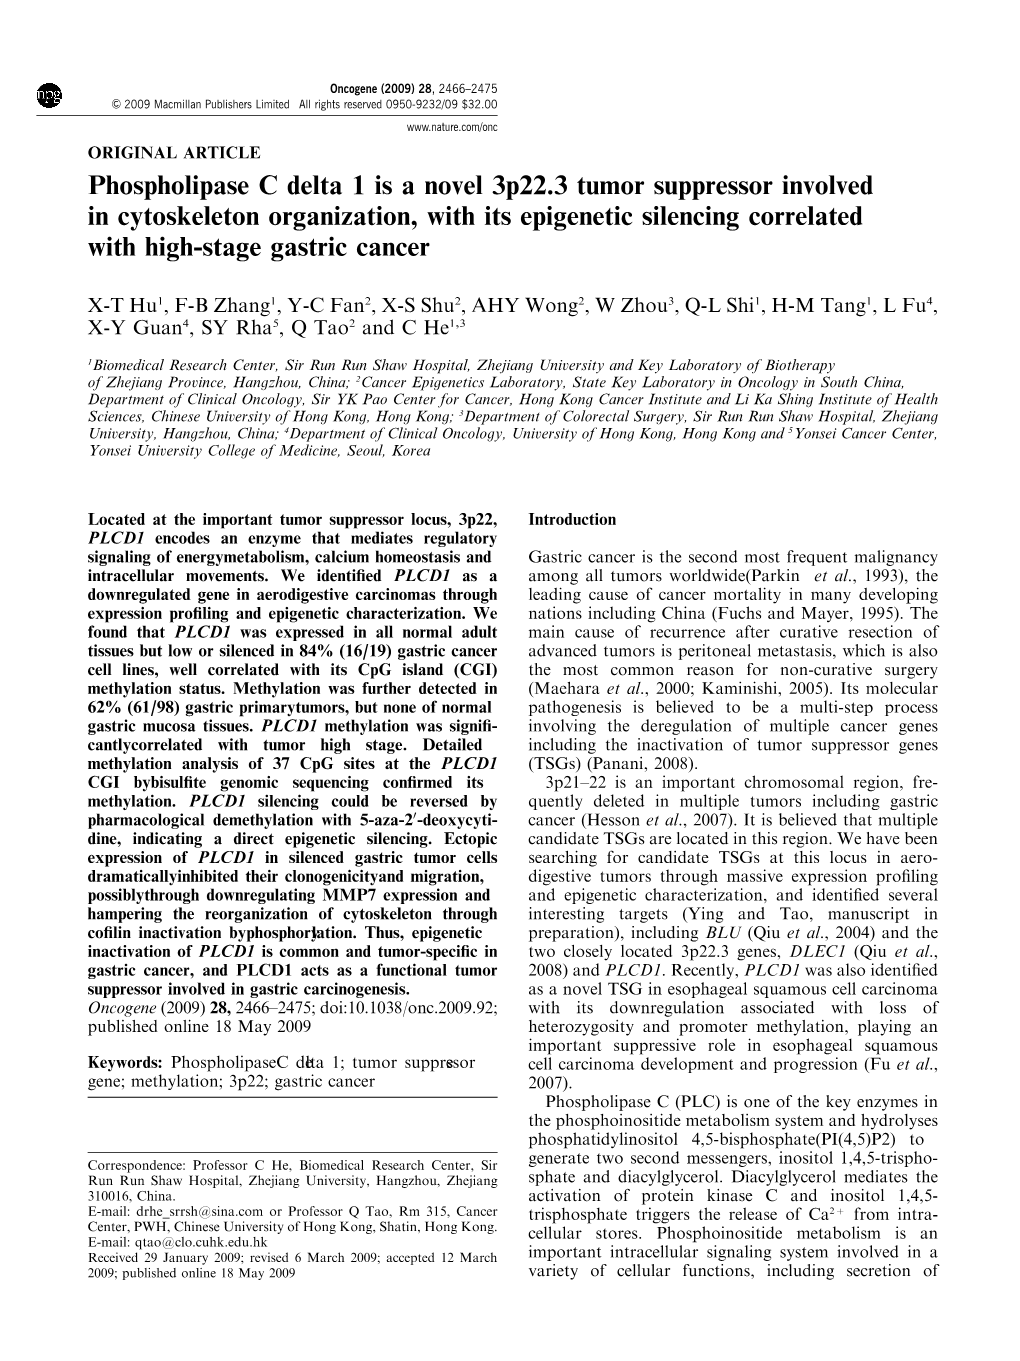 Phospholipase C Delta 1 Is a Novel 3P22.3 Tumor Suppressor Involved